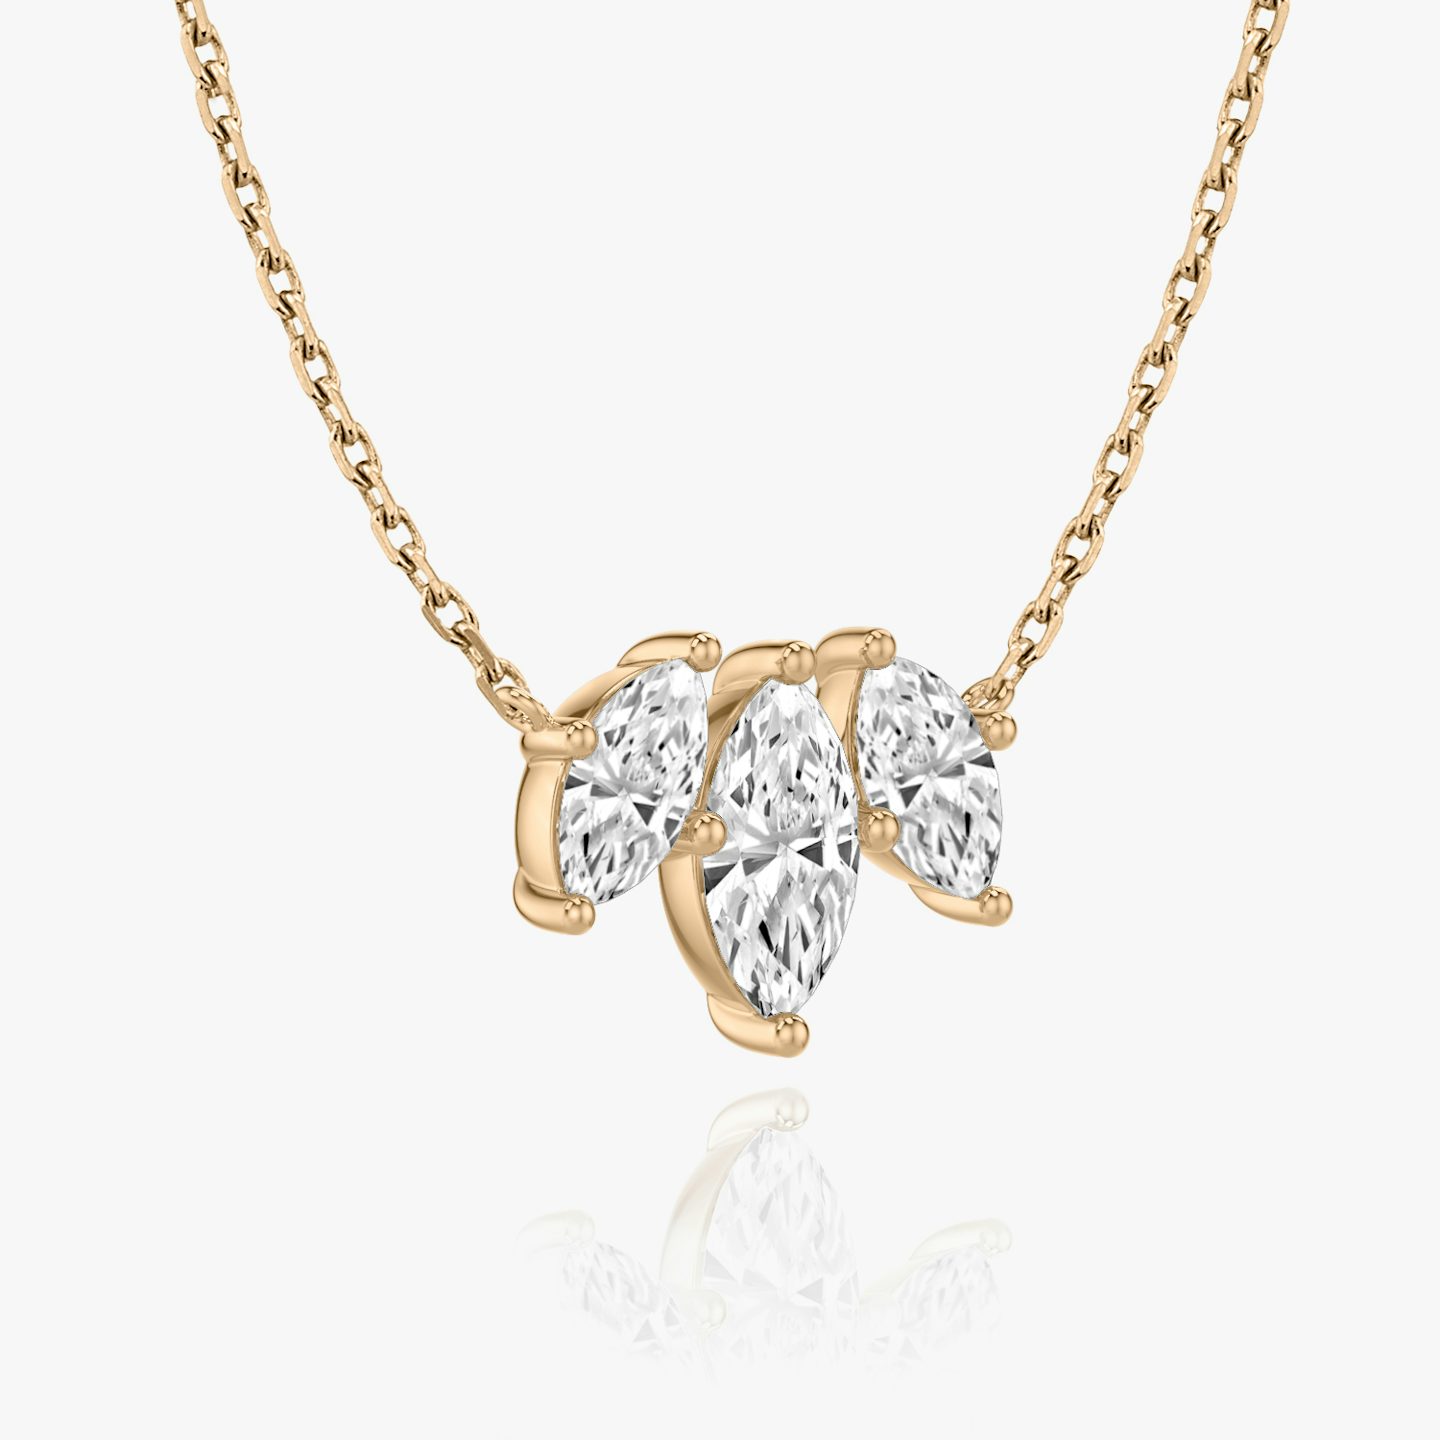 Arc Necklace | Marquise | 14k | Rose Gold | diamondCount: 3 | diamondSize: large | chainLength: 16-18